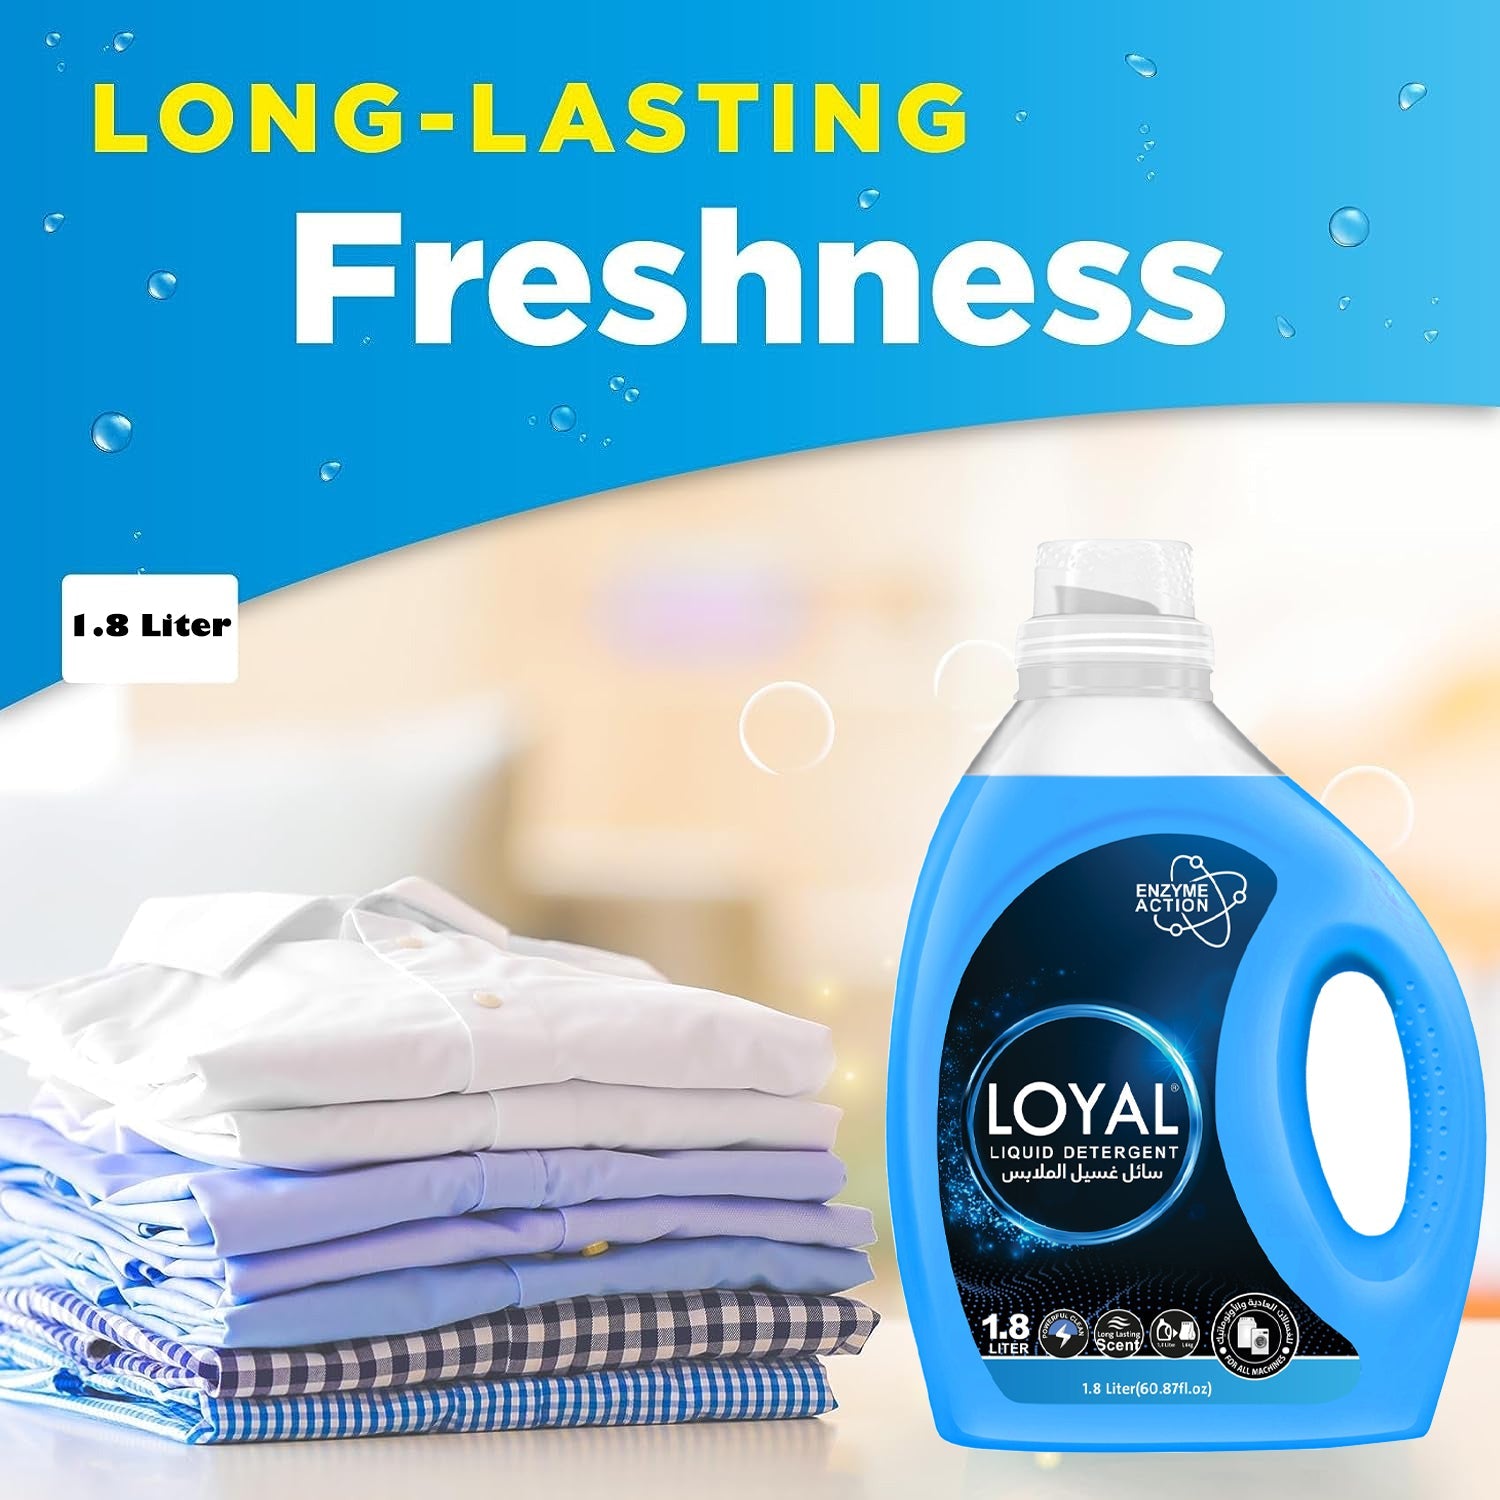 Loyal Liquid Detergent 1.8L | Pack of 6 |